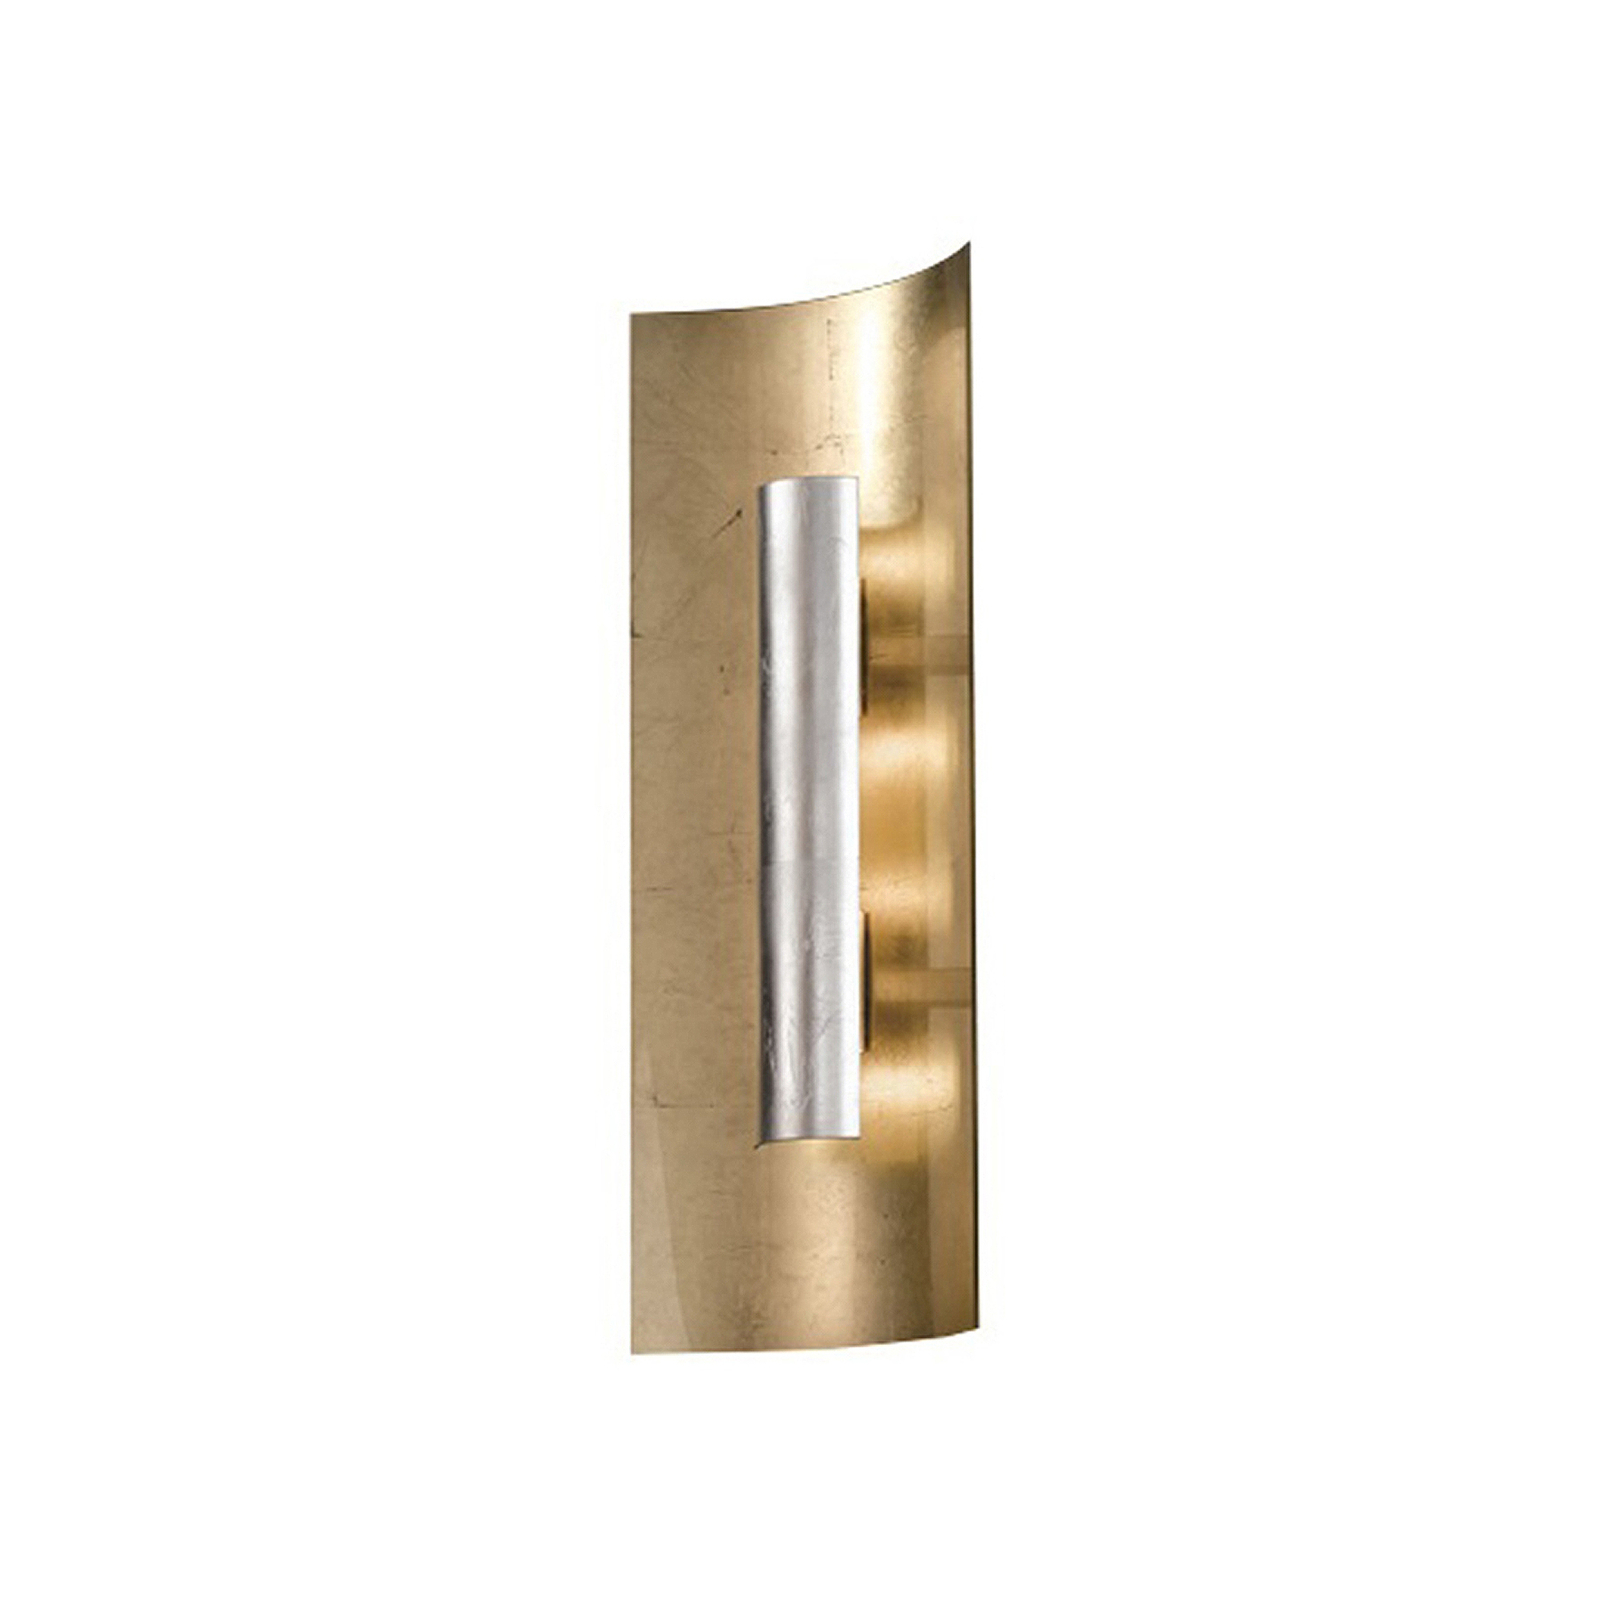 Aura Gold wall light, silver shade, height 60 cm